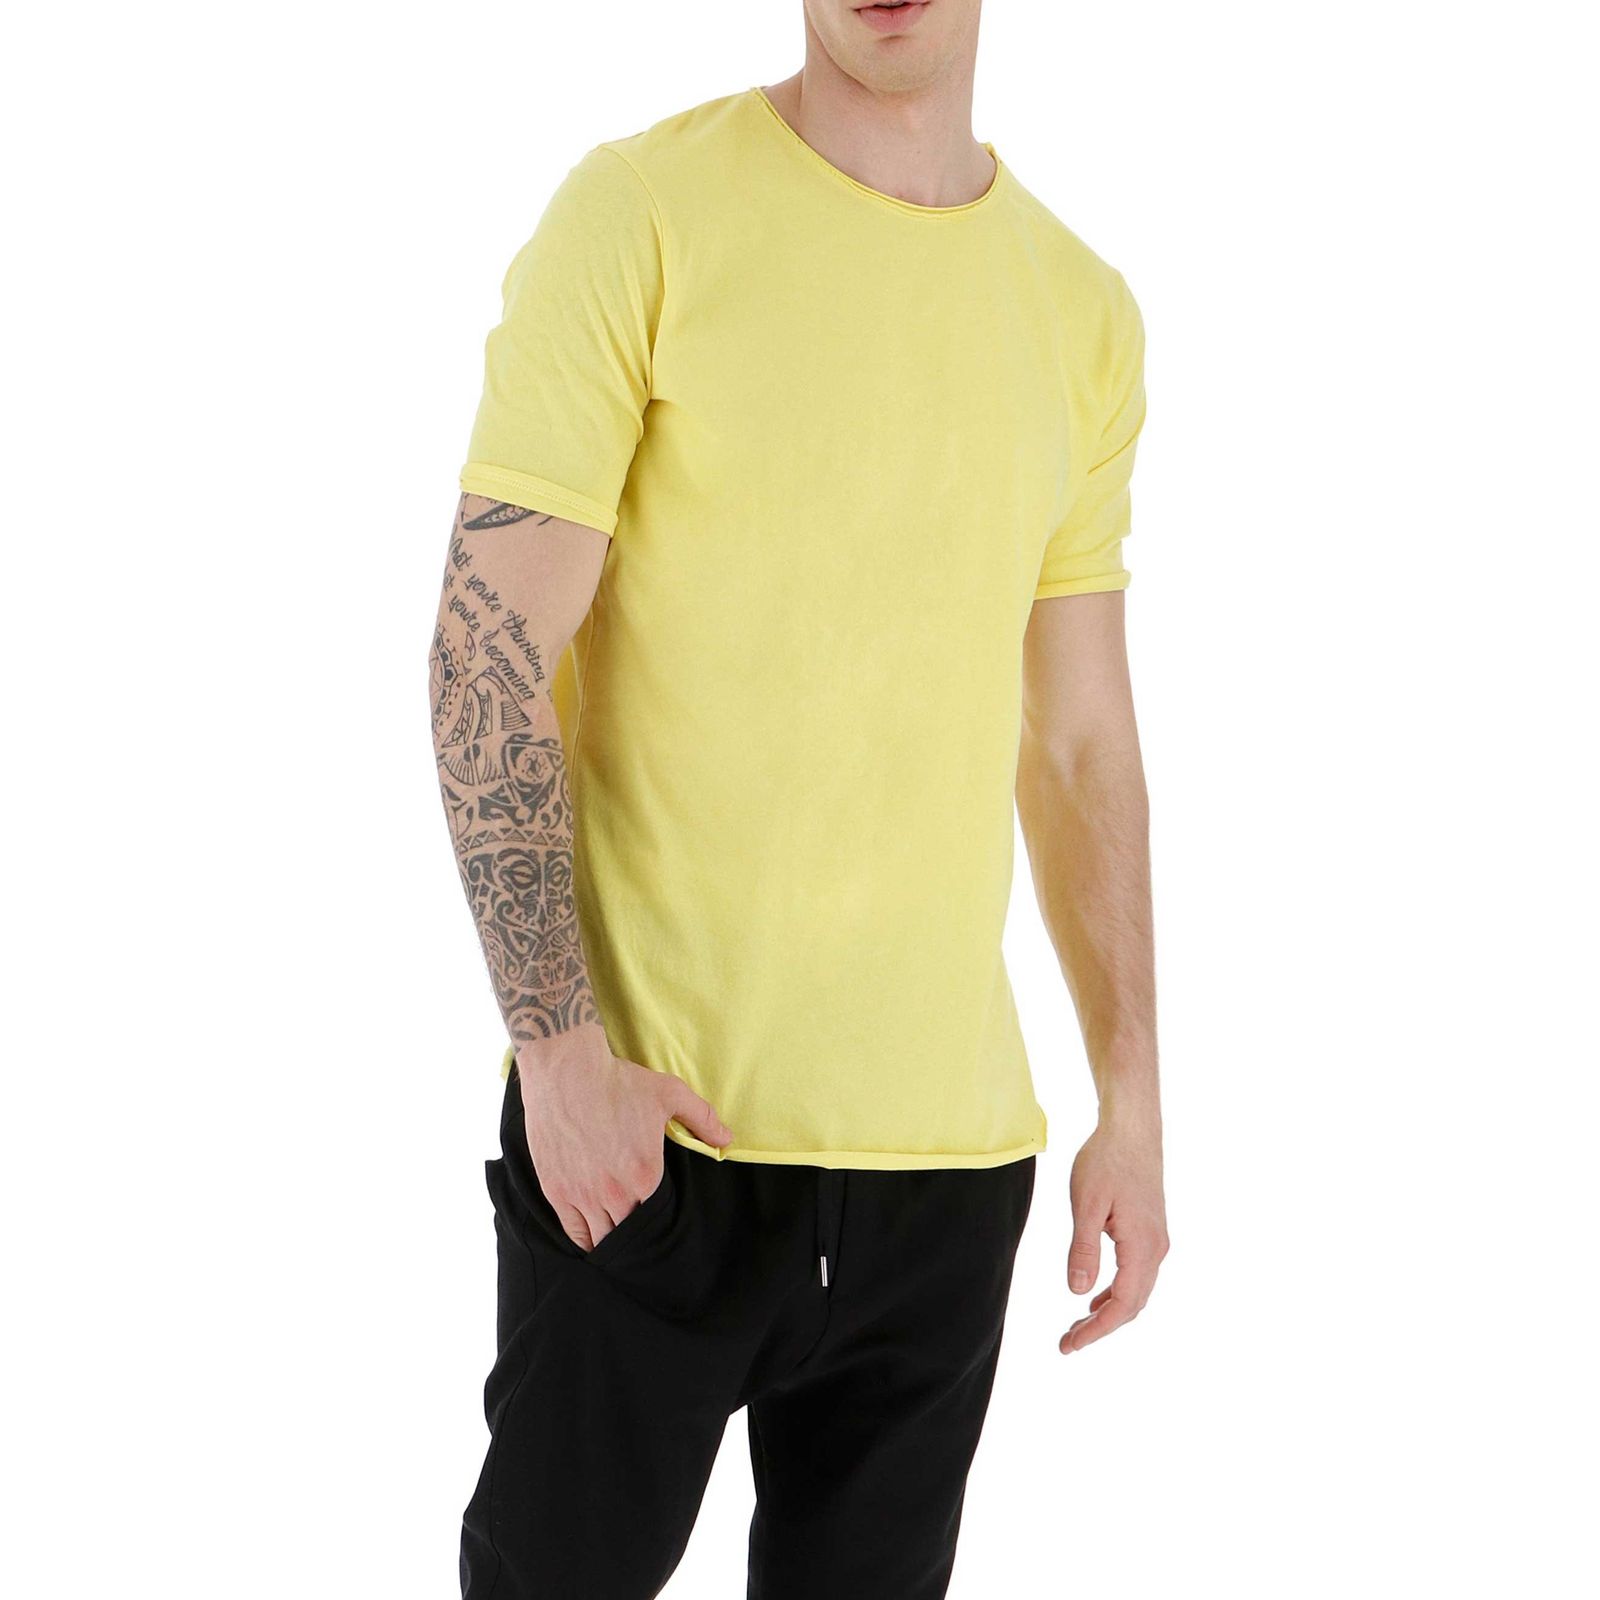 تی شرت نخی یقه گرد مردانه - امپریال - زرد - 1